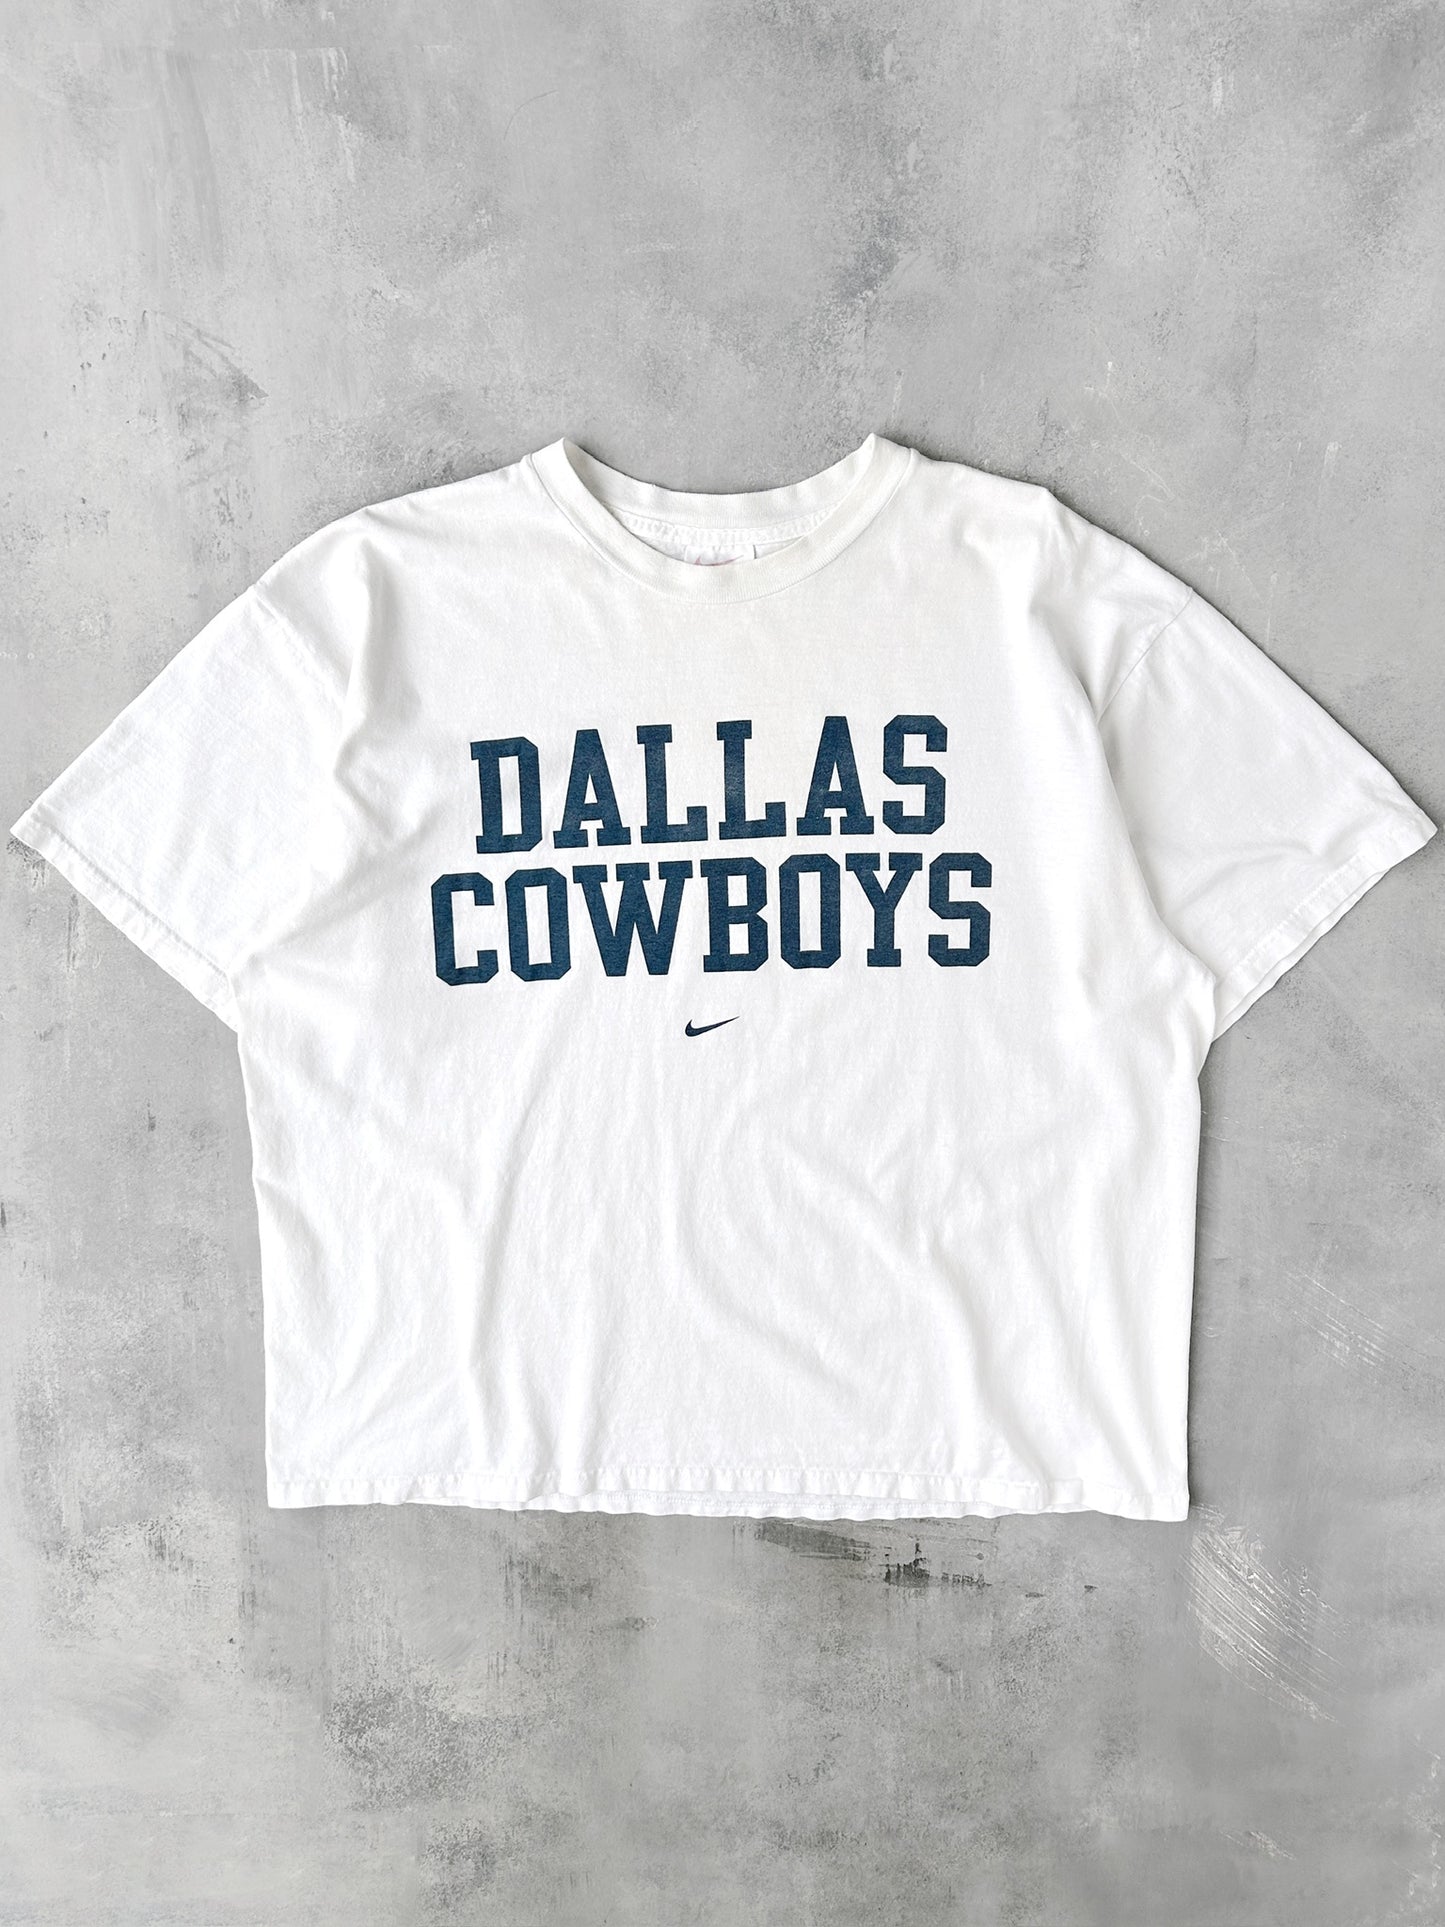 Dallas Cowboys T-Shirt 00's - XL